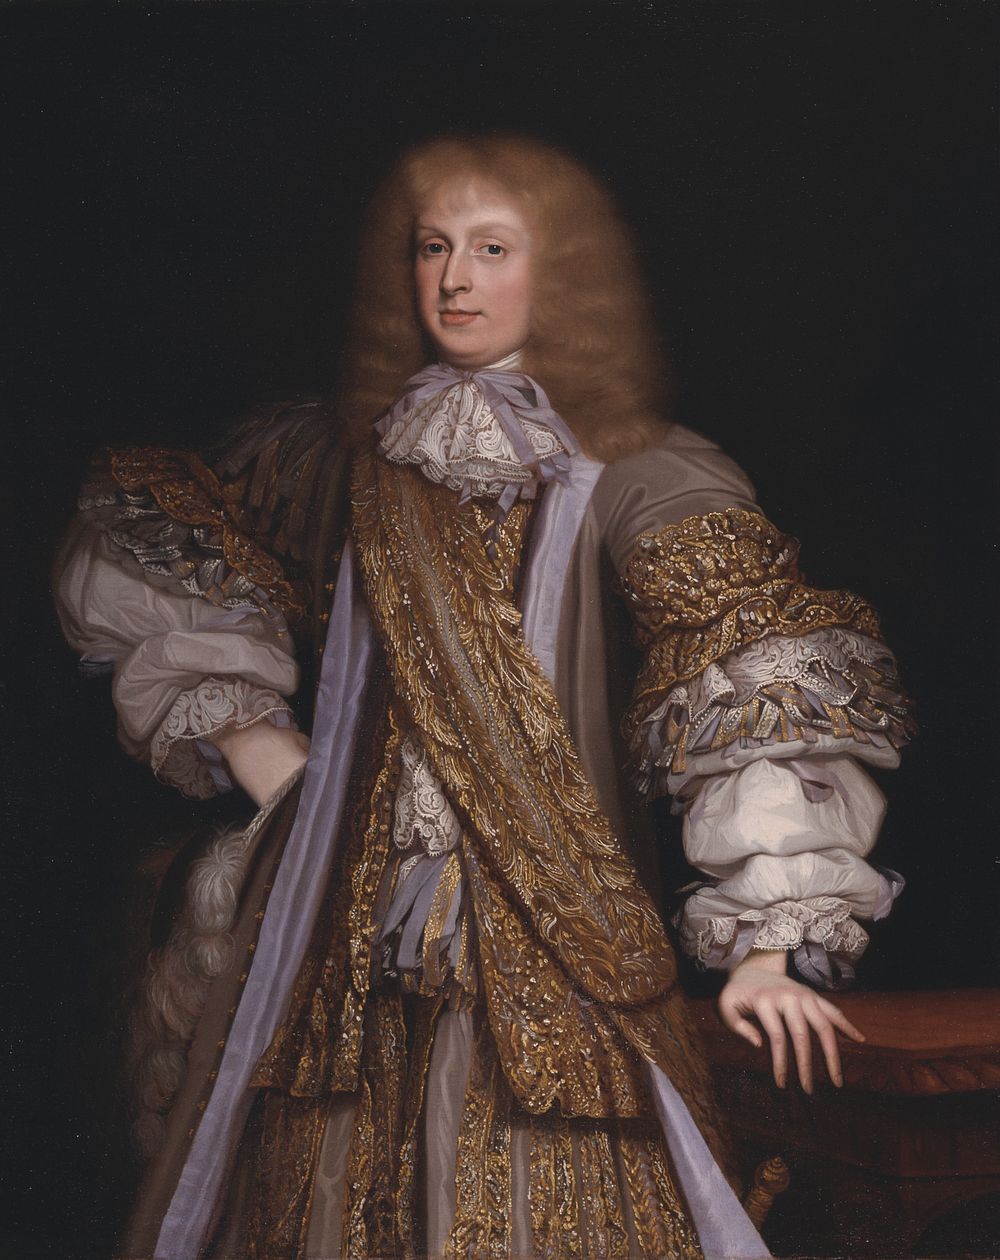 Sir John Corbet of Adderley by John Michael Wright